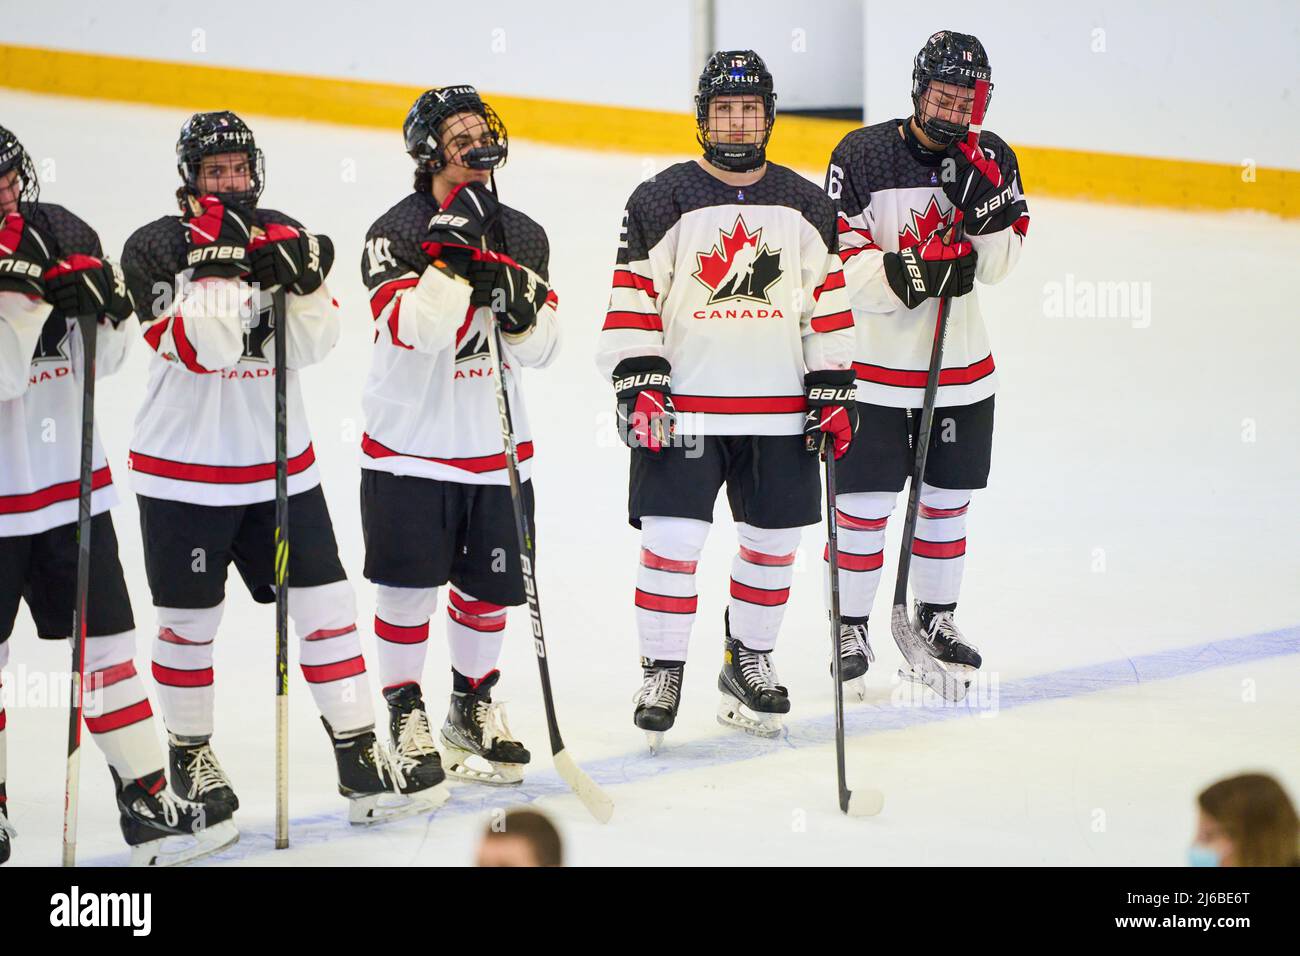 Team Canada sad after the match FINLAND - CANADA 6-5 (OT) IIHF U18 JUNIOR  ICE HOCKEY WORLD CHAMPIONSHIPS quarter final in Kaufbeuren, Germany, Apr  28, 2022, Season 2021/2022 © Peter Schatz / Alamy Live News Stock Photo -  Alamy